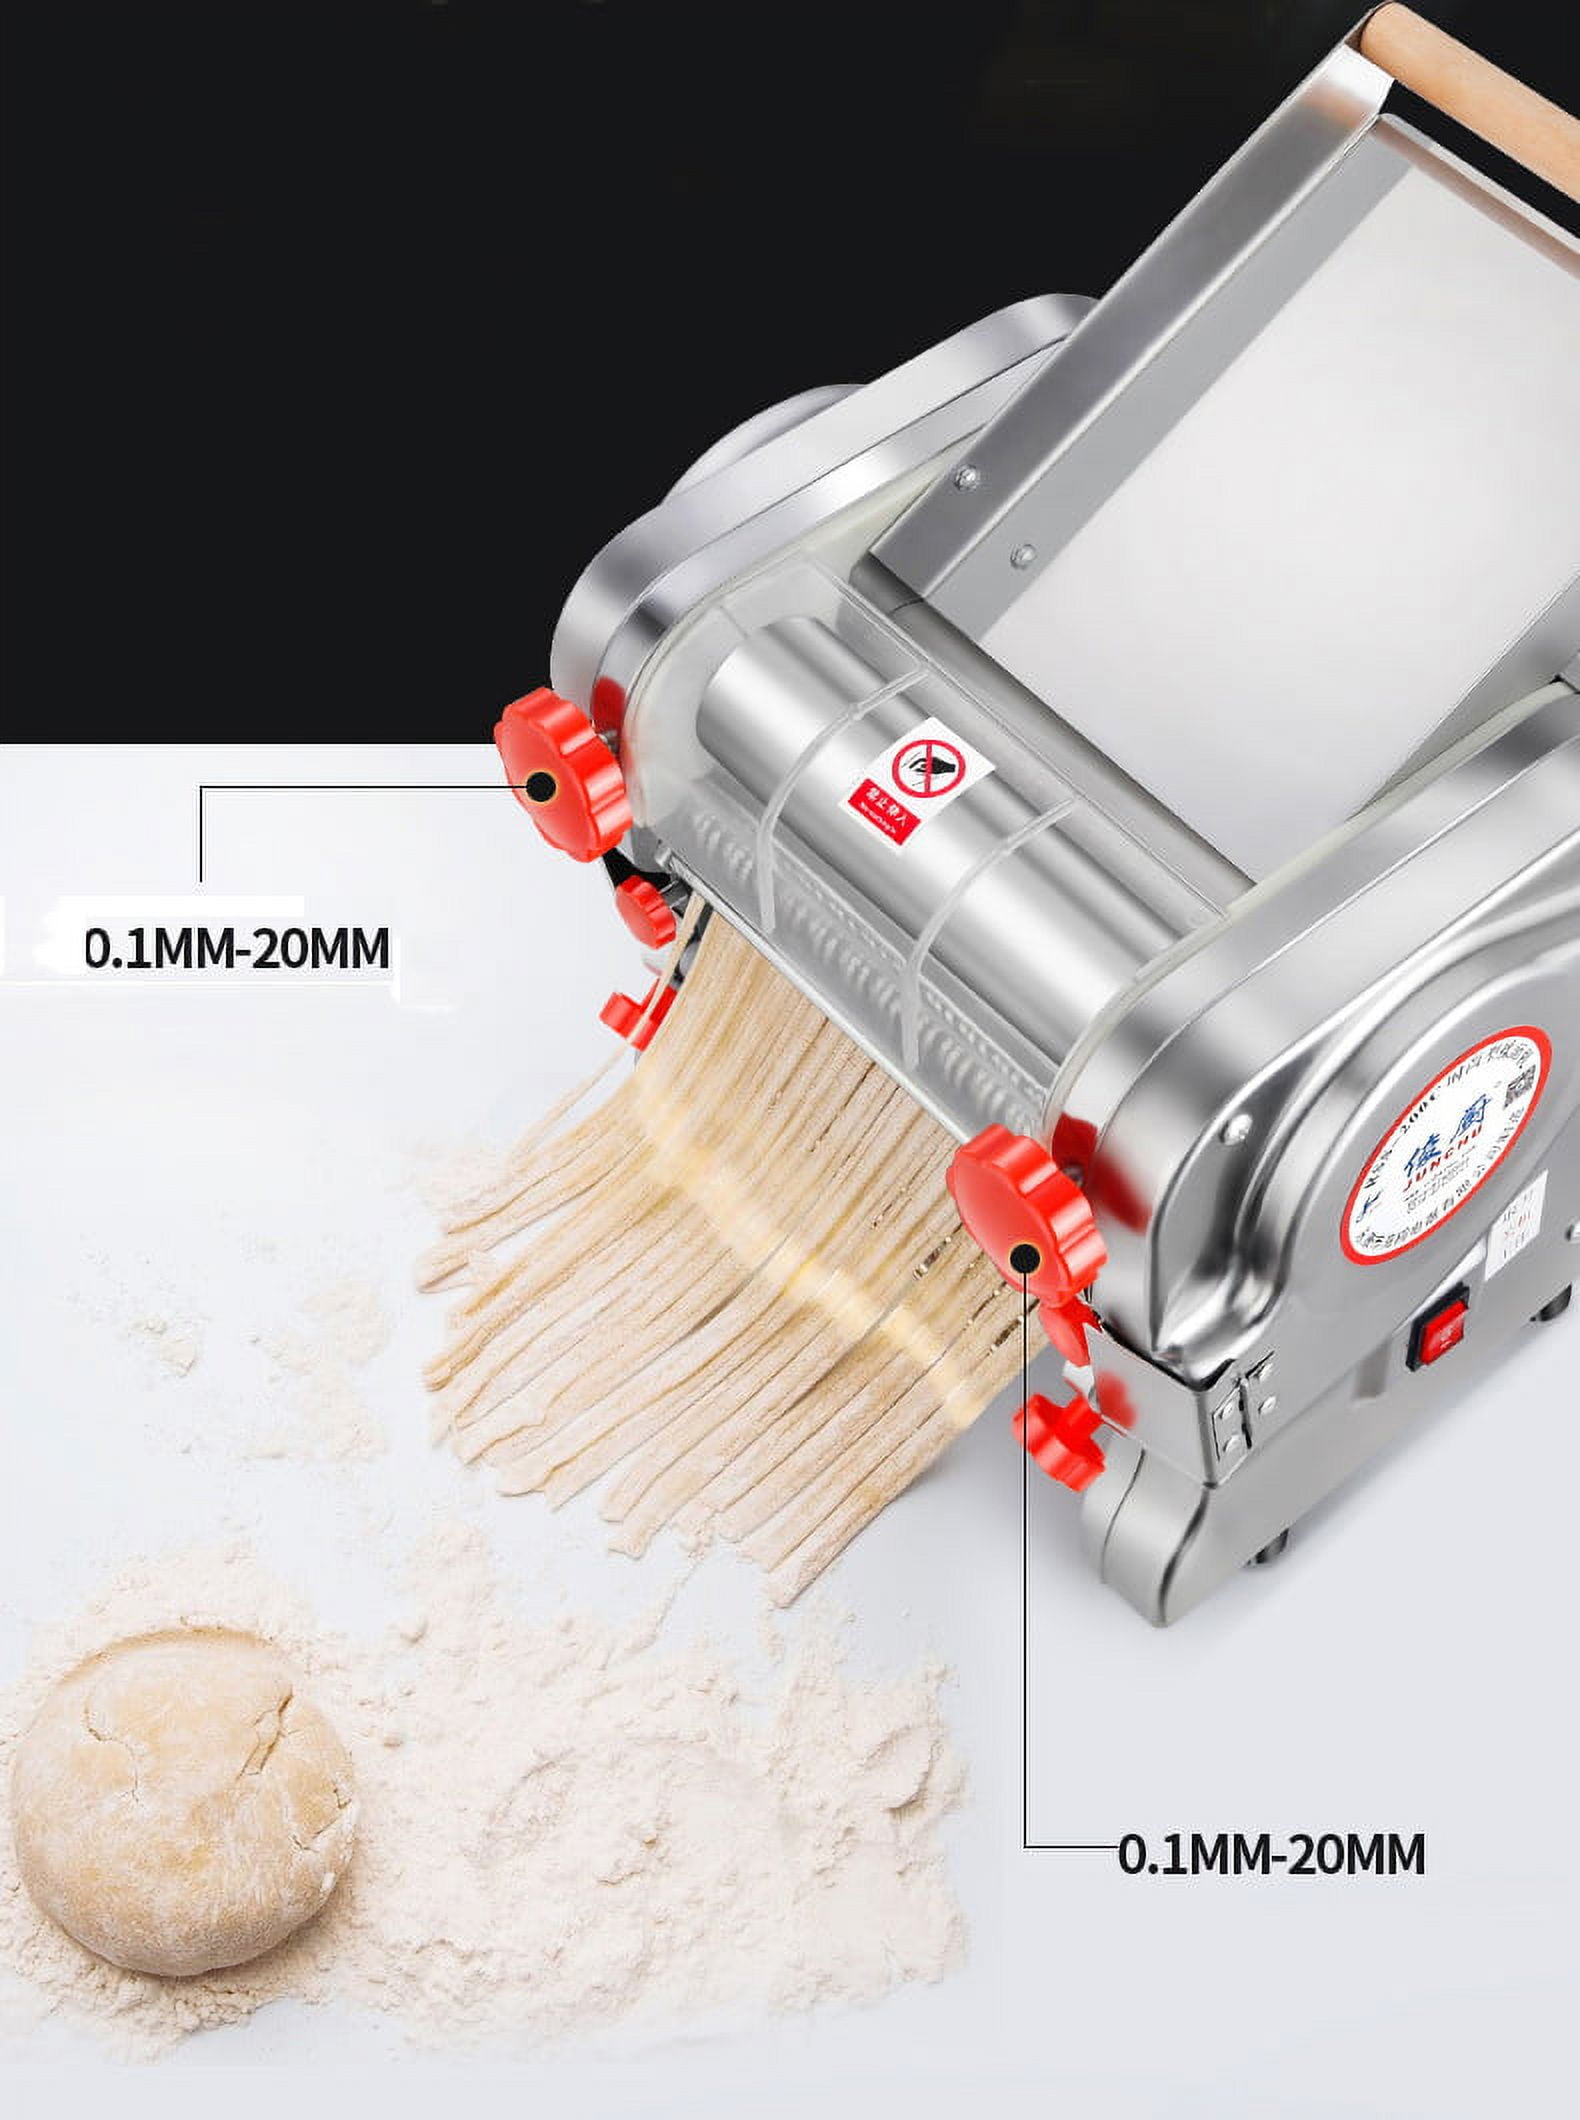 DelMonaco » The pasta maker's equipment  Pasta maker, Baking equipment,  Gadgets kitchen cooking